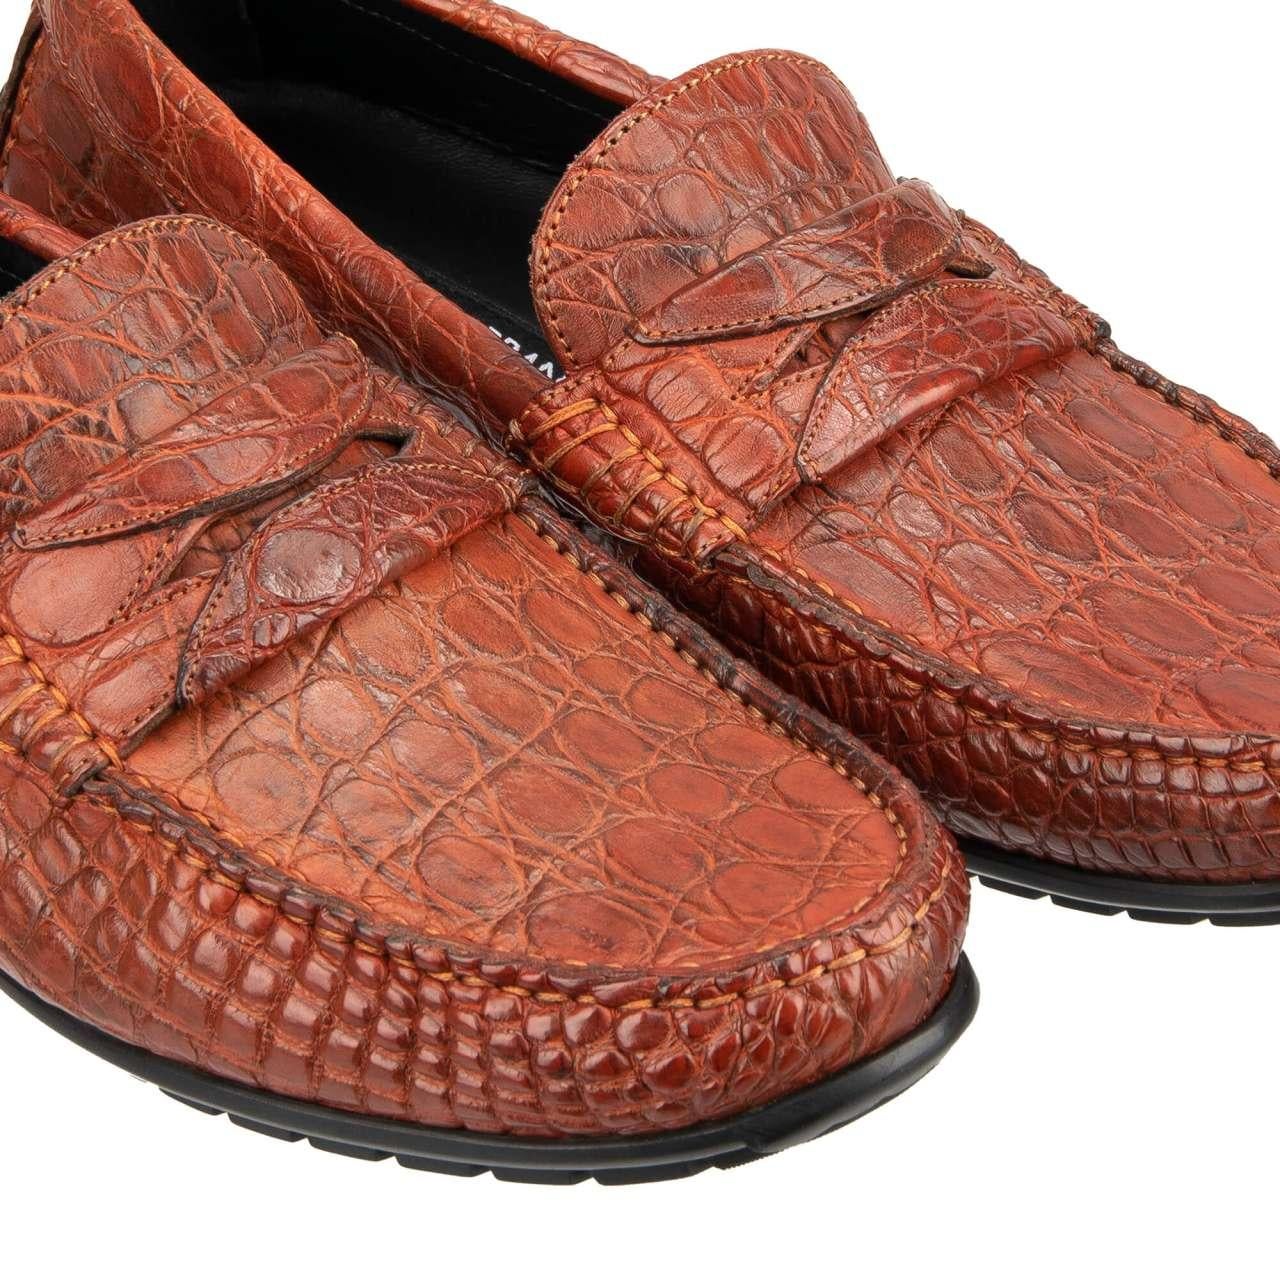 Dolce & Gabbana - Caiman Leather Moccasins Loafer Shoes RAGUSA Orange EUR 40 In Excellent Condition For Sale In Erkrath, DE